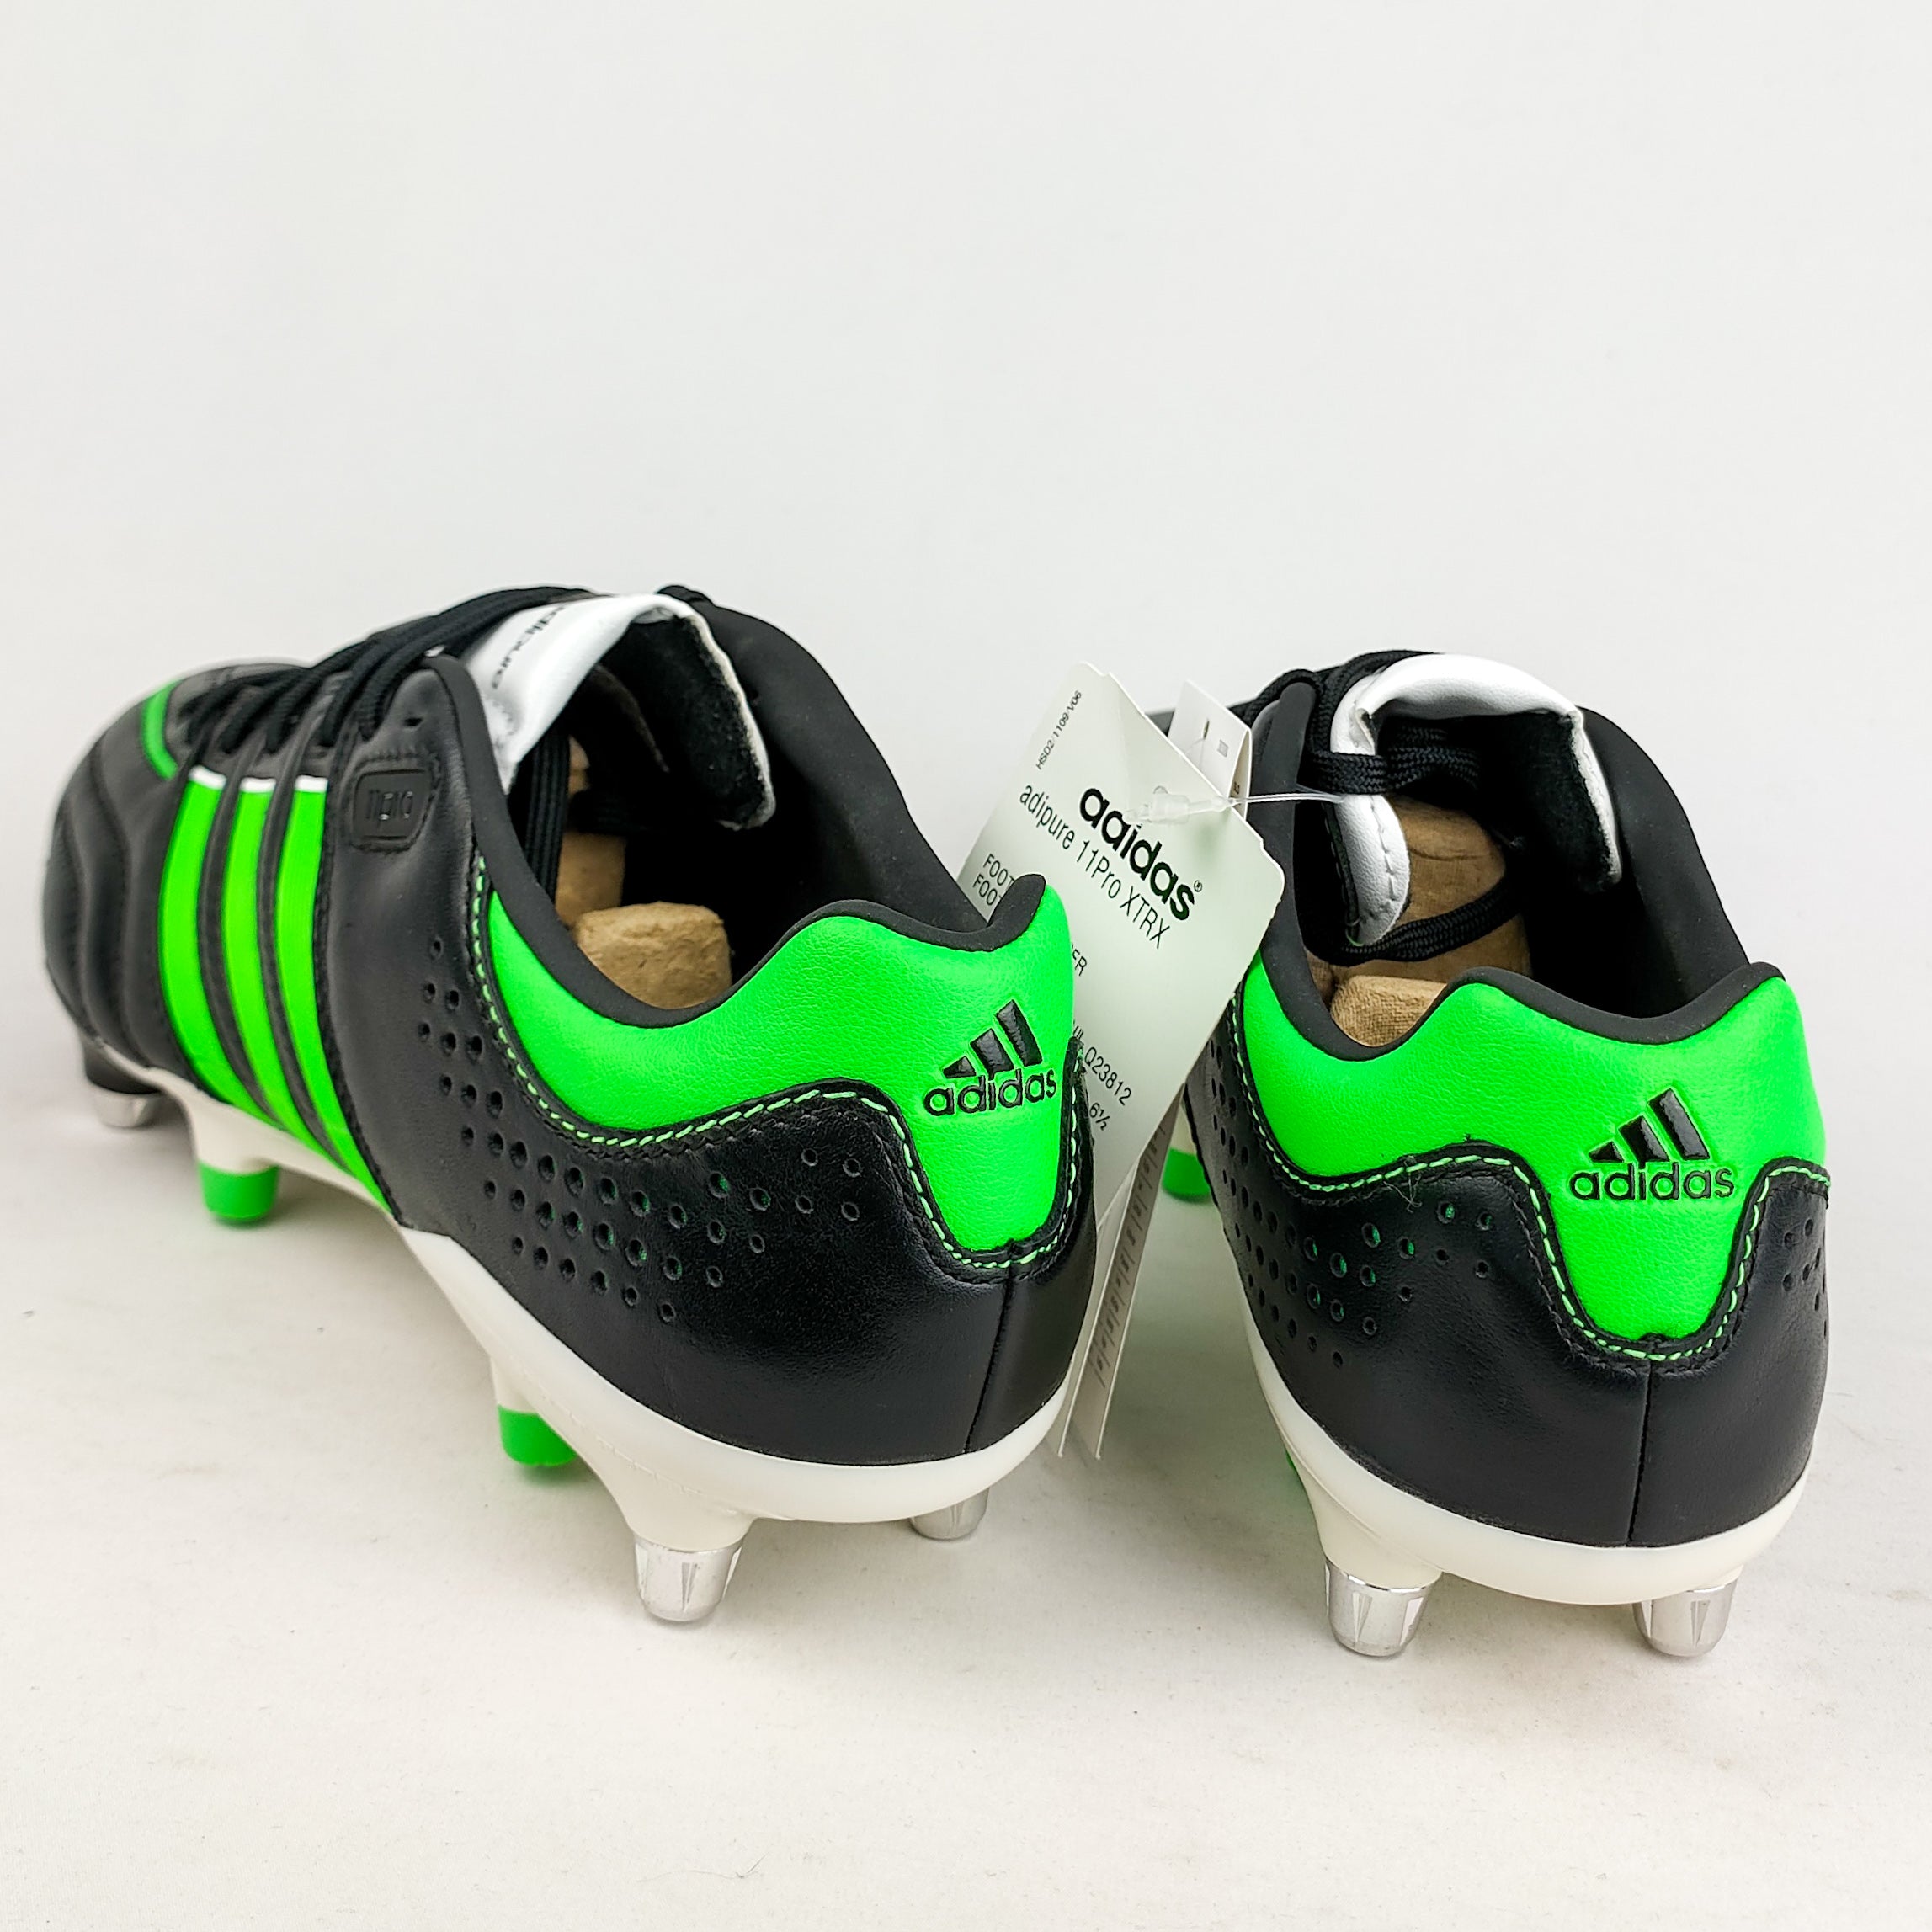 Adidas Adipure 11Pro XTRX SG - Black/Green Zest/White *In Box 